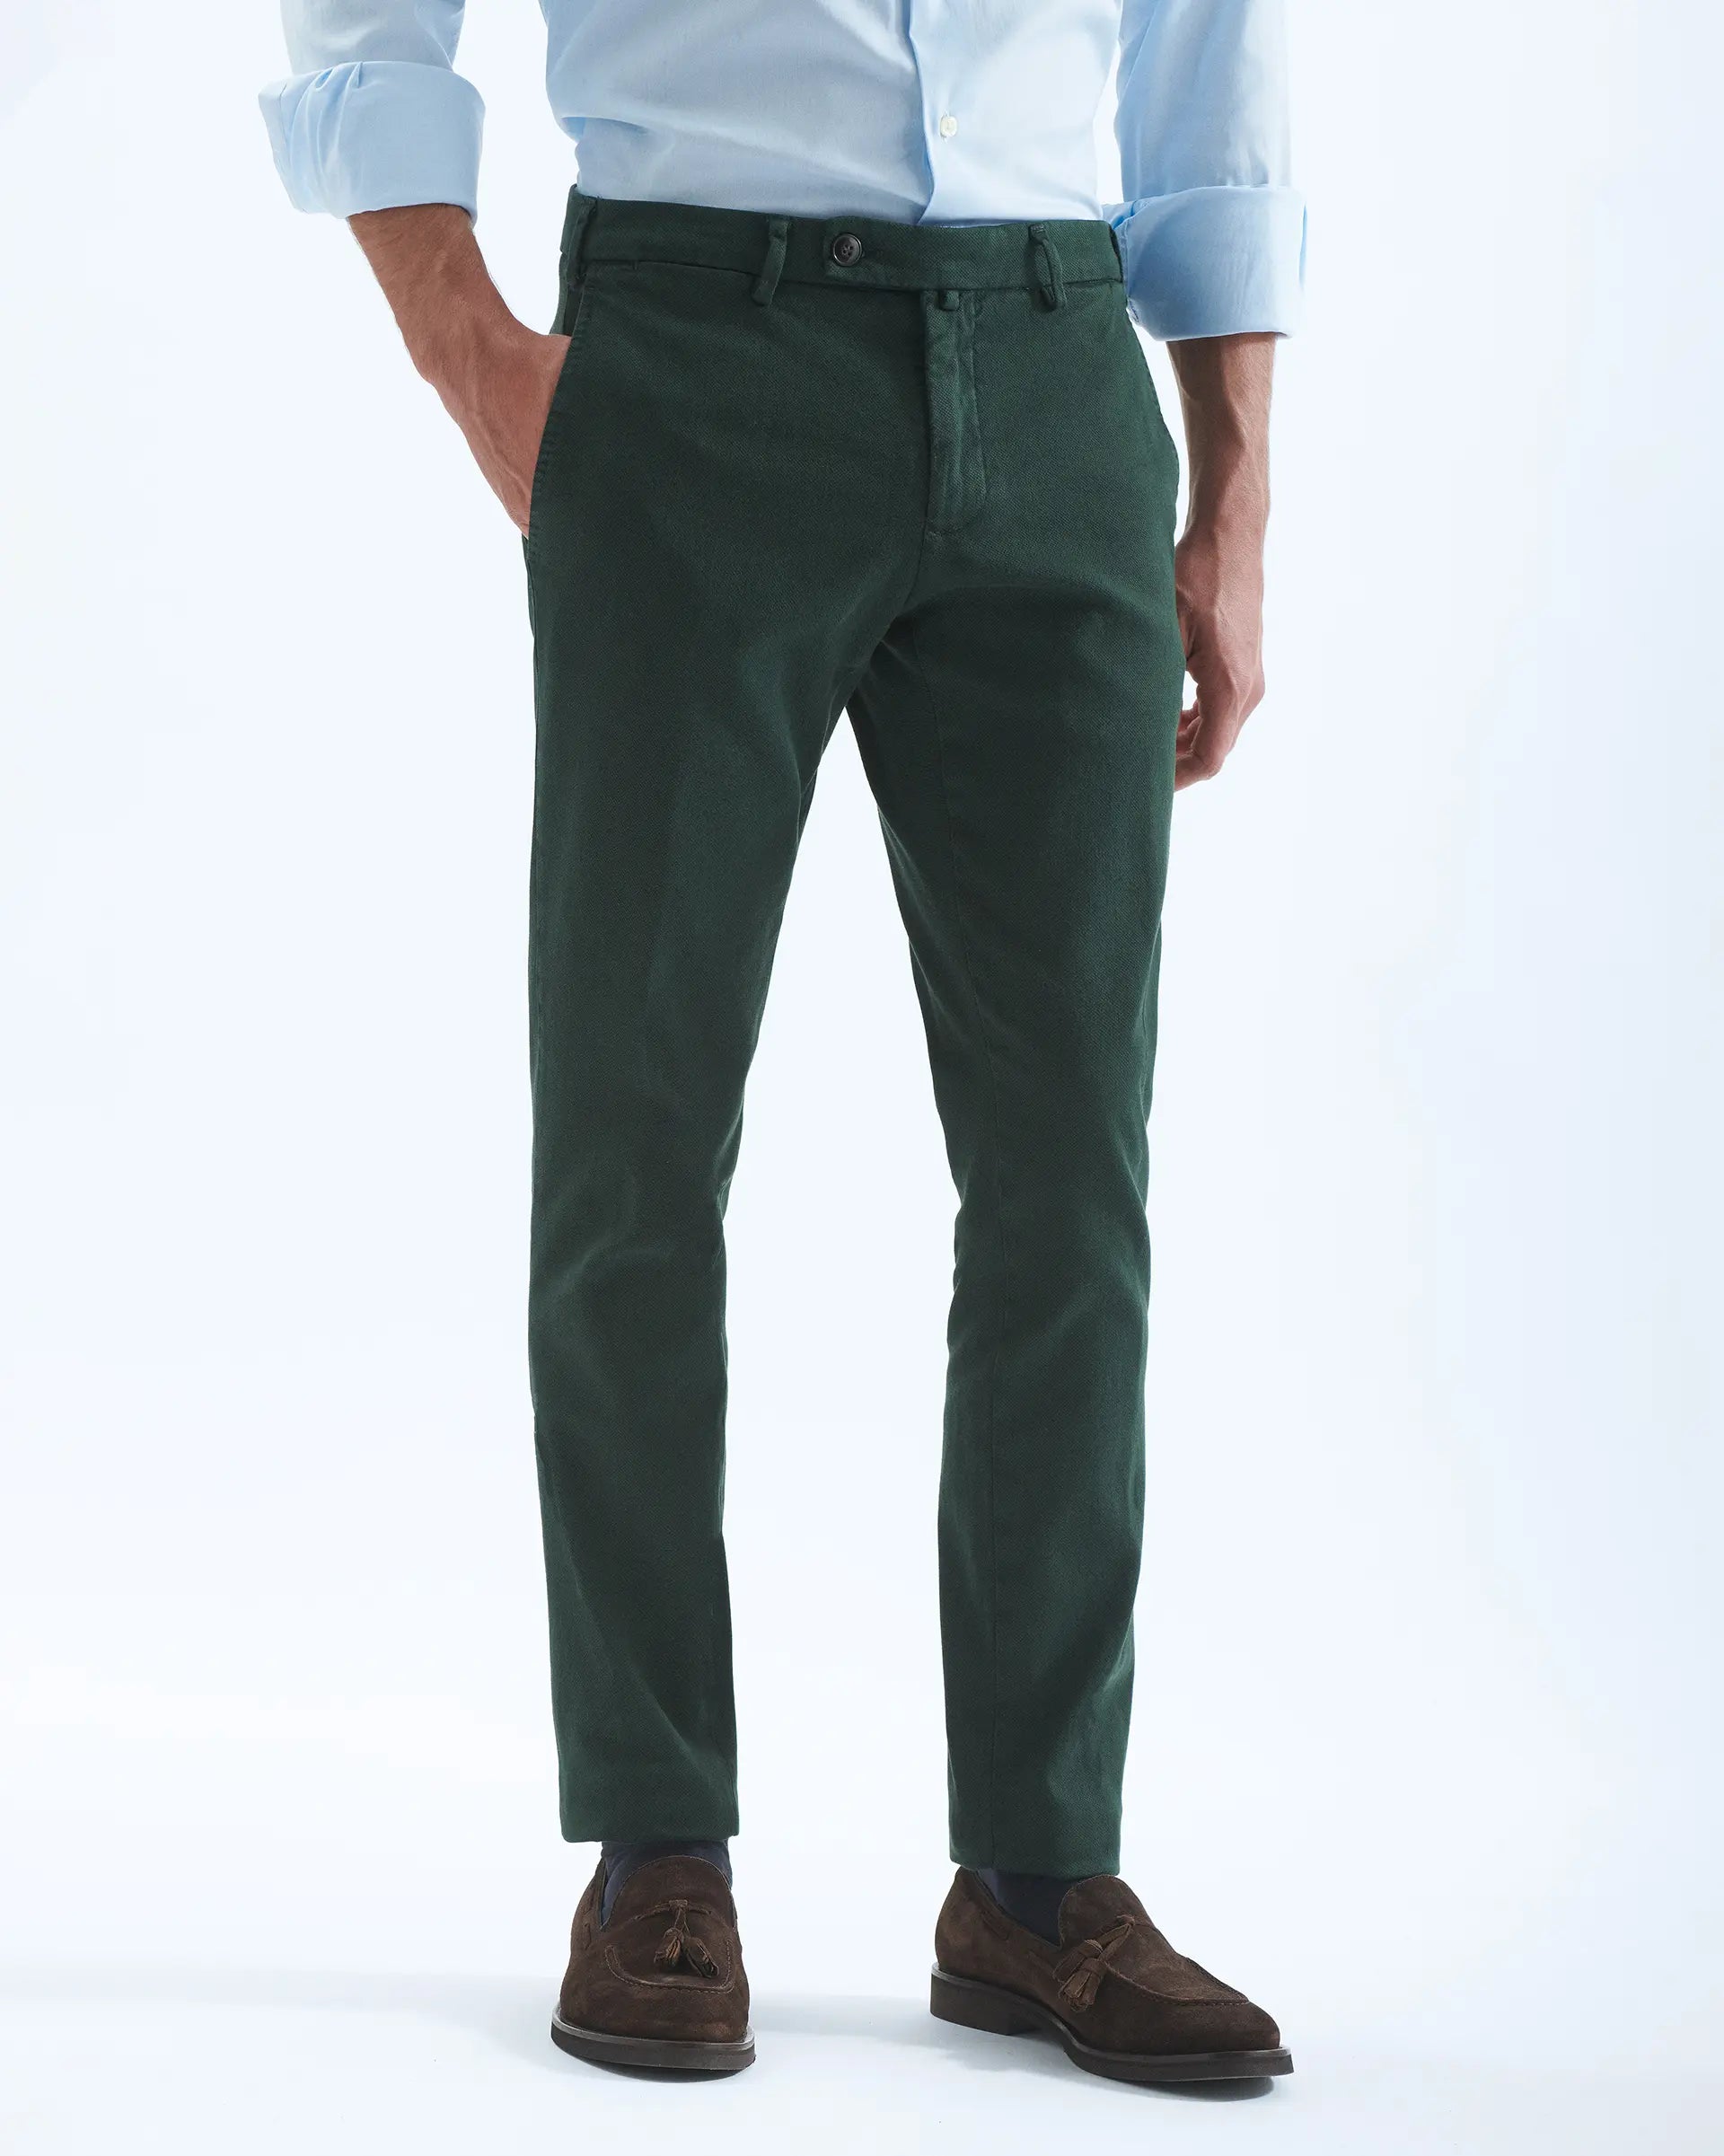 Green Canvas Cotton Stretch pants